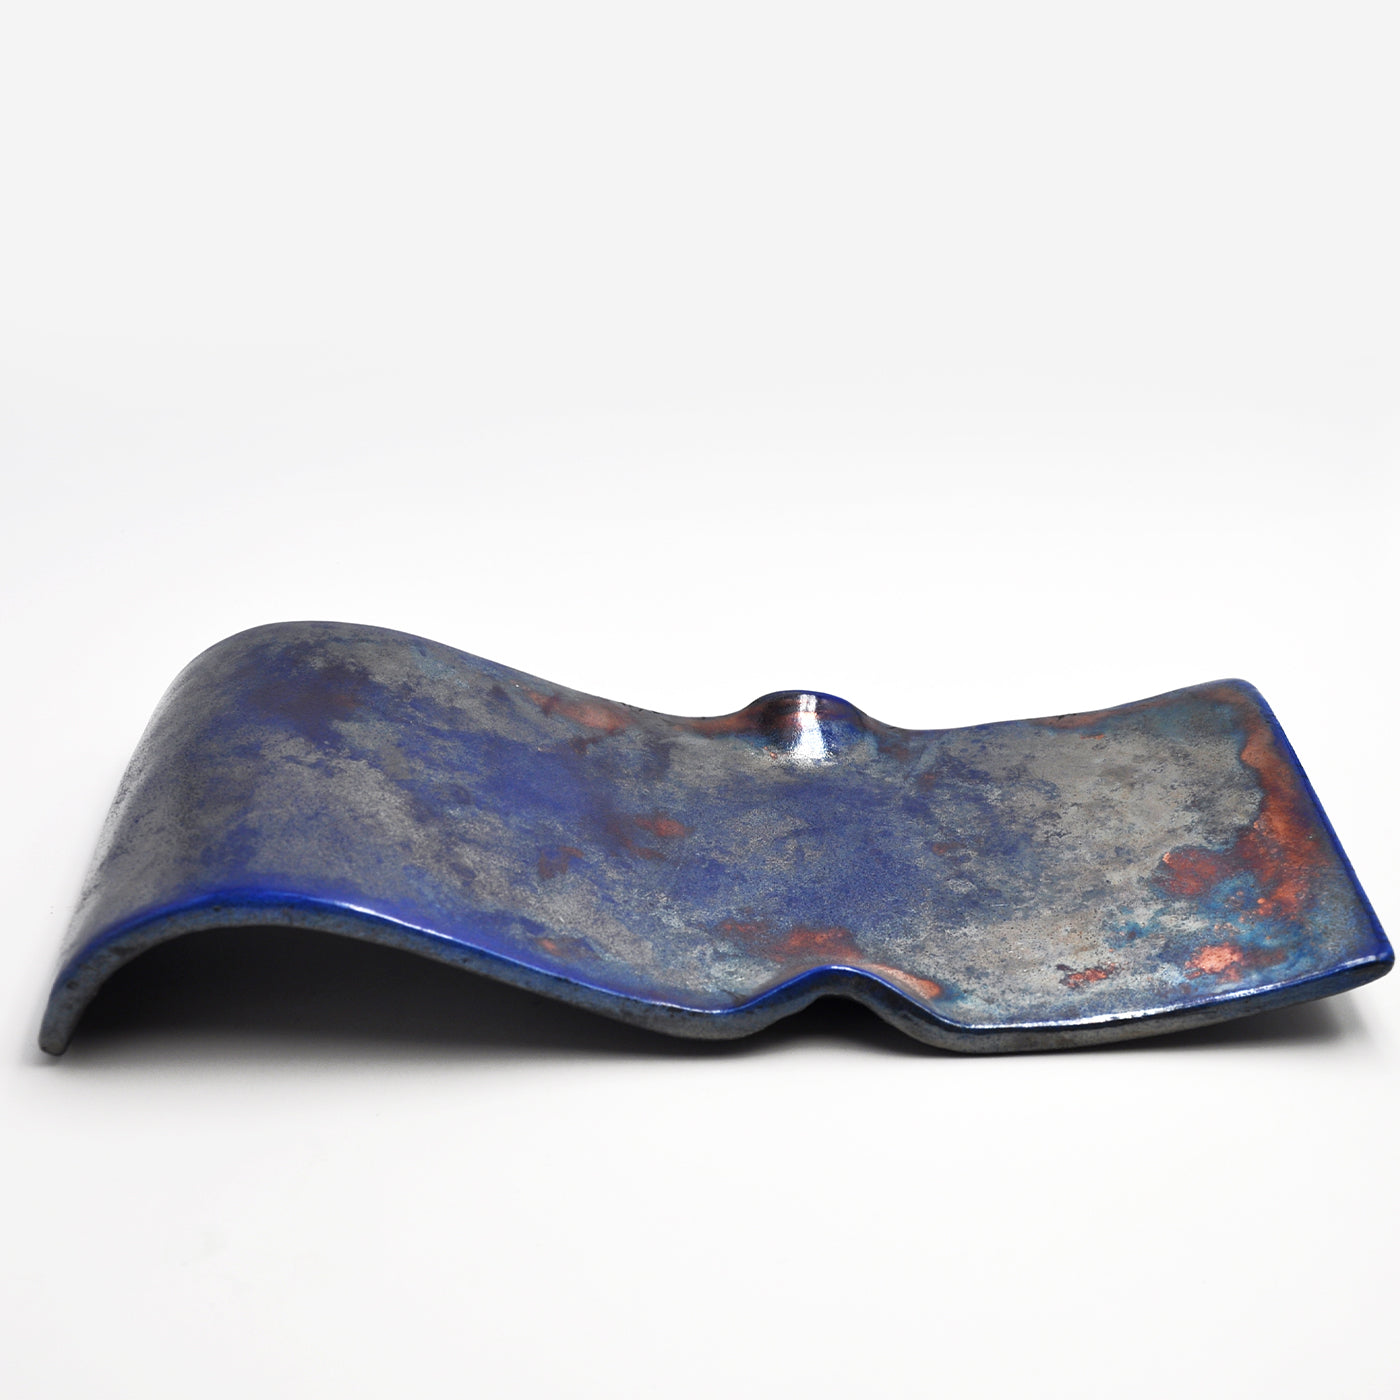 Onda Piccola Coppery/Blue Centerpiece Plate by Nino Basso - Alternative view 2